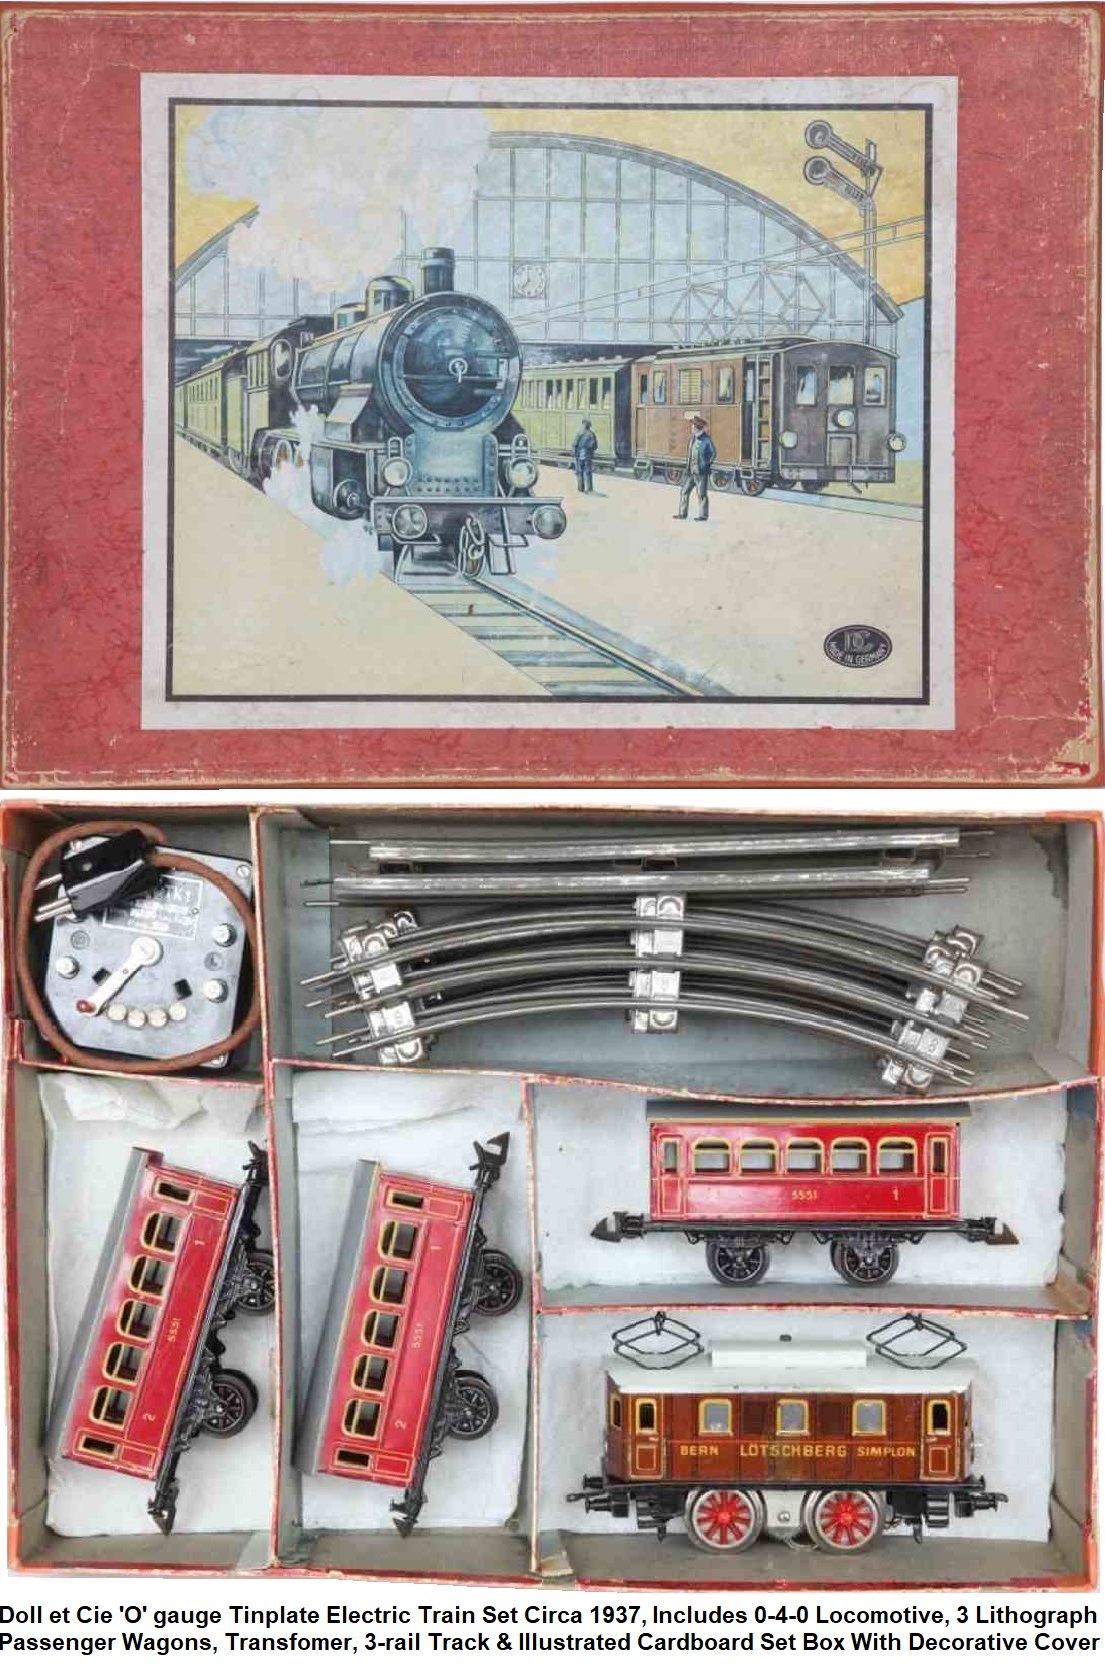 Doll et Cie. Tinplate Railway 'O' gauge passenger set circa 1937 in illustrated box